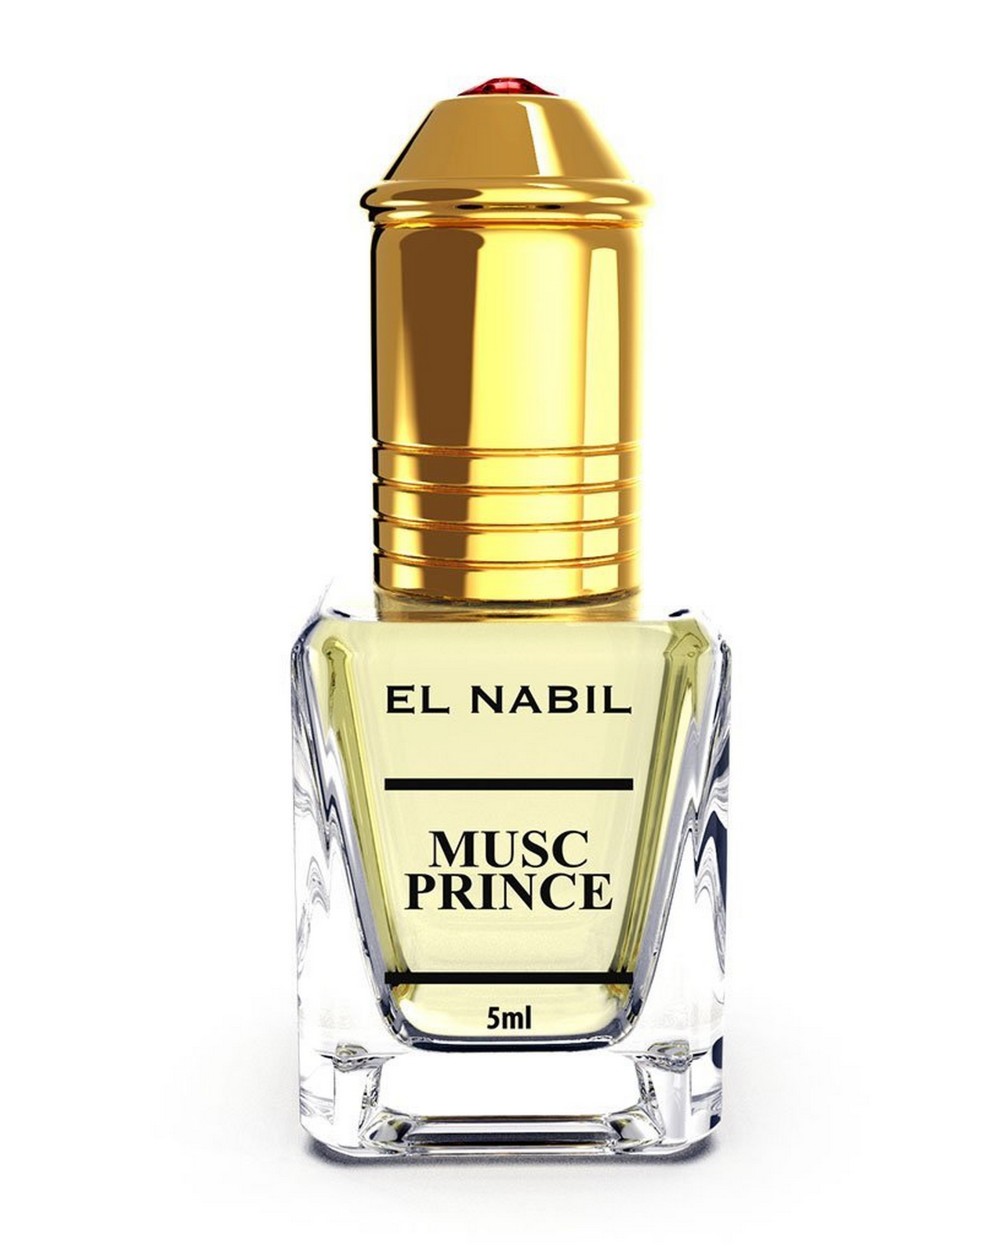 Musc prince El Nabil 5 ml